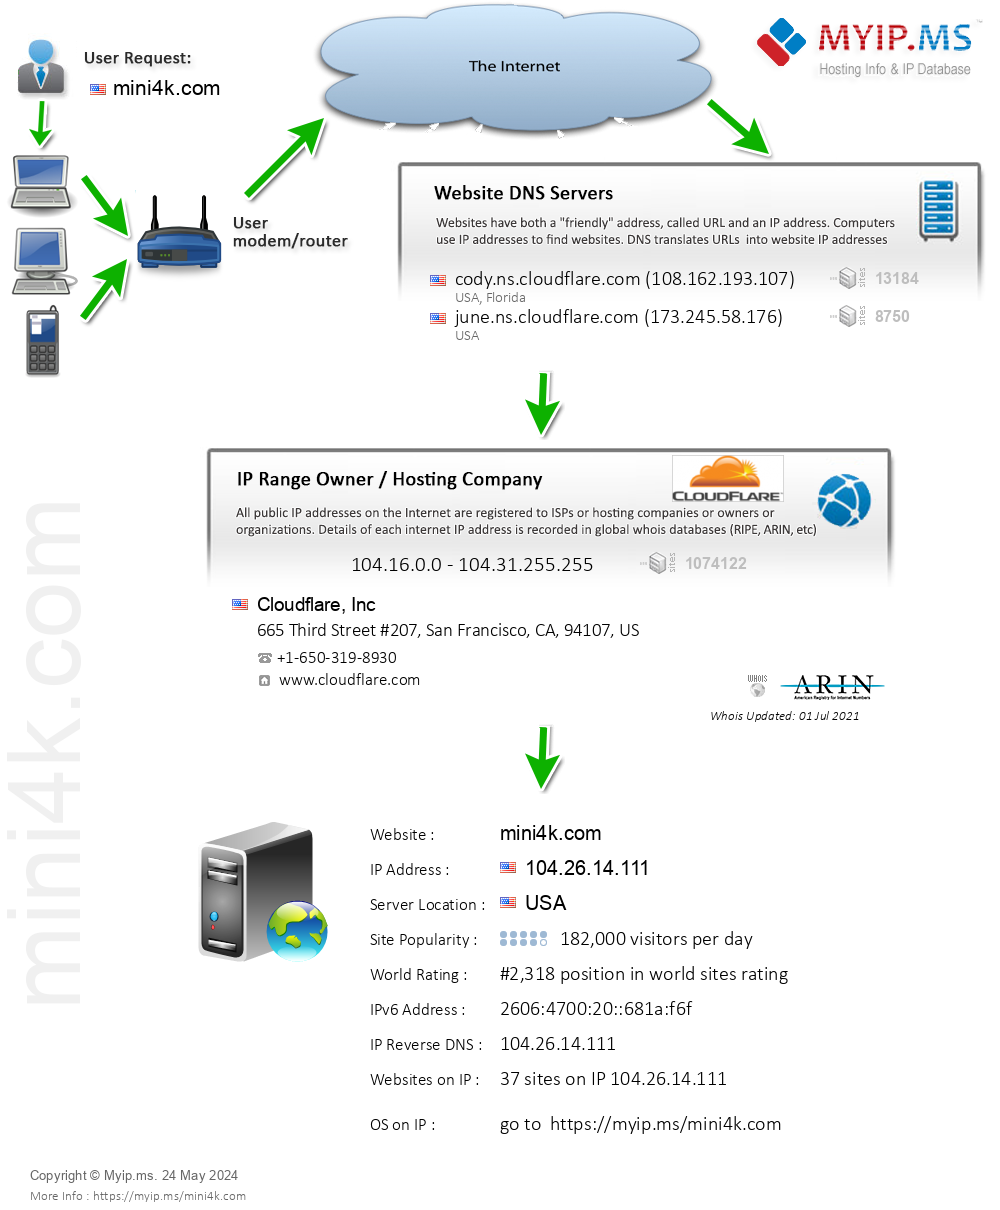 Mini4k.com - Website Hosting Visual IP Diagram